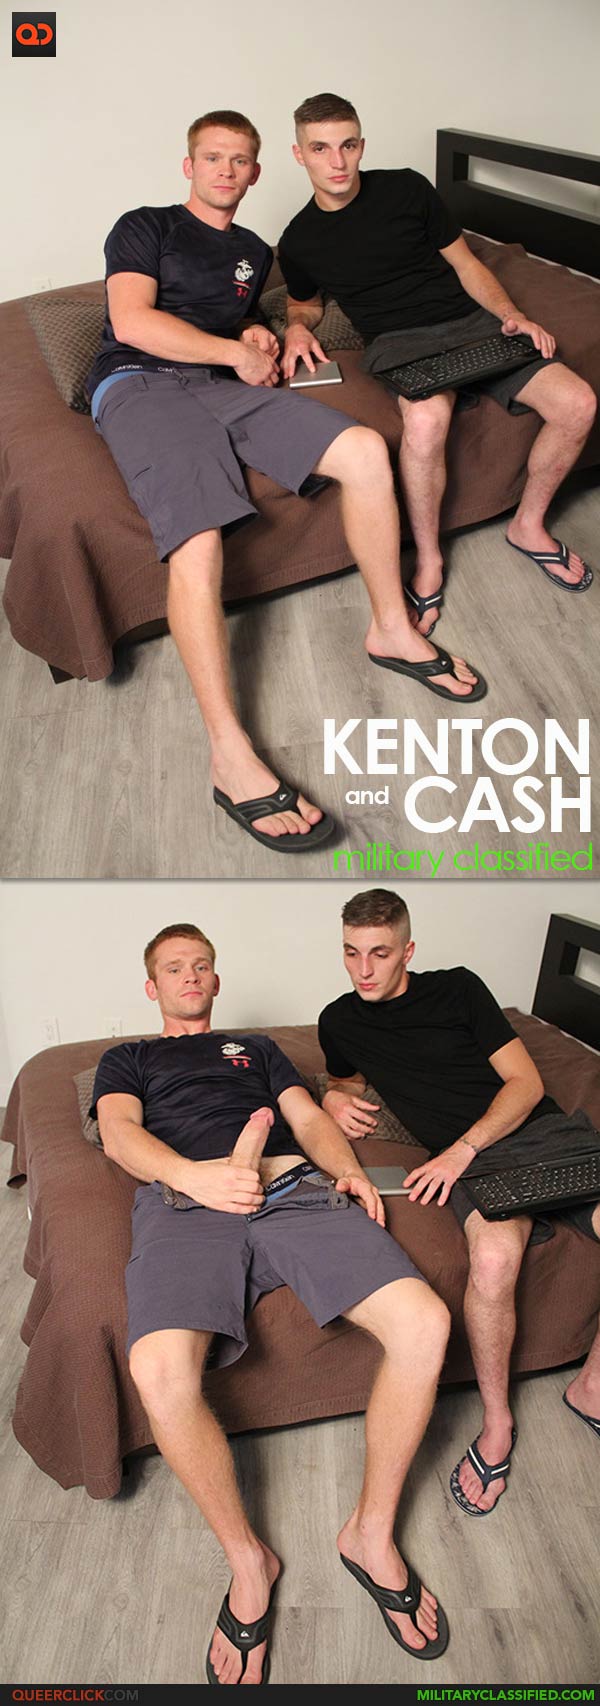 MilitaryClassified: Kenton and Cash